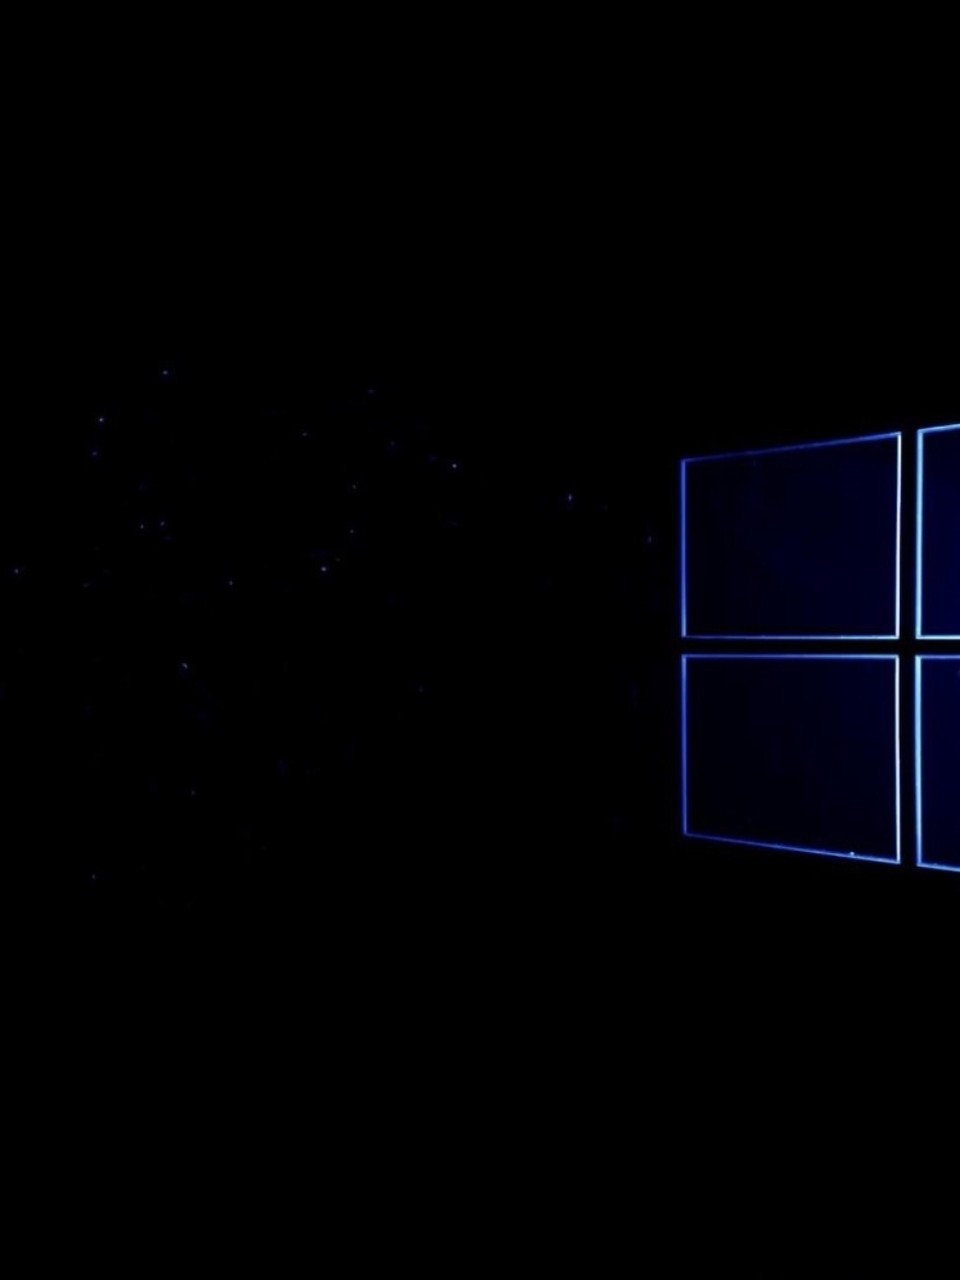 Image: Windows 10, stars, squares, window, space, darkness